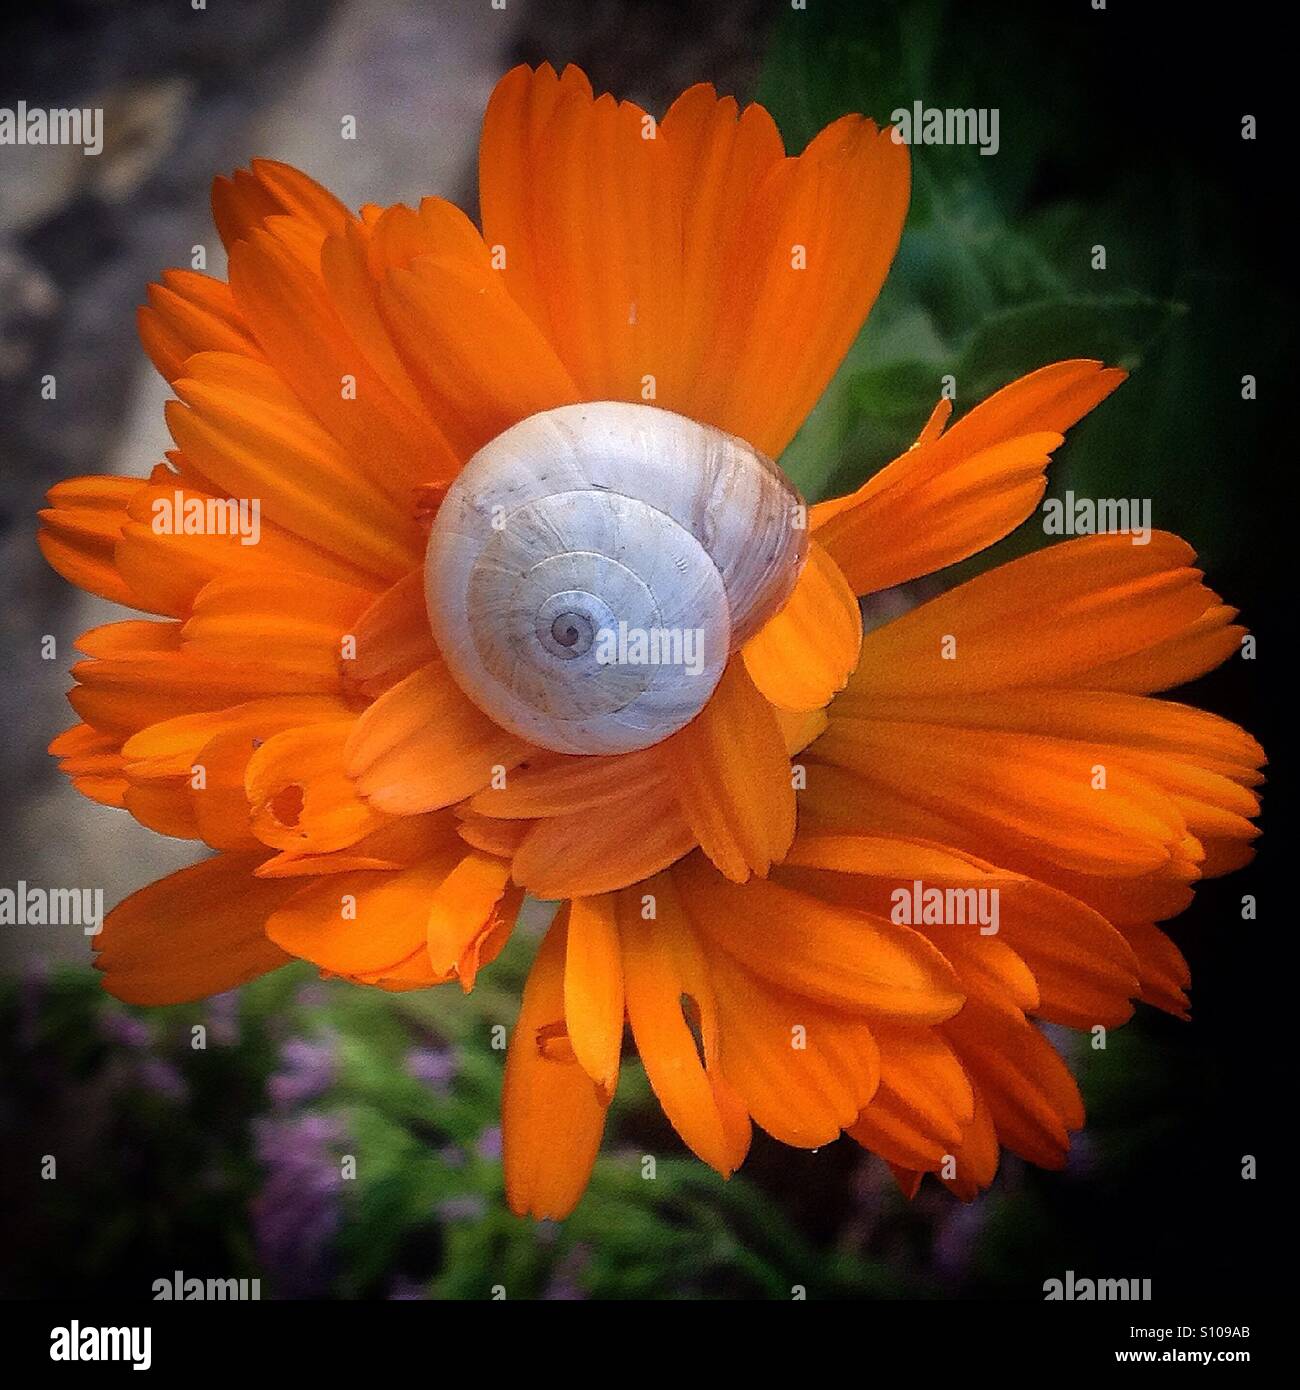 A snail perchs on an orange daisy flower in Prado del Rey, Sierra de Cadiz, Andalusia, Spain Stock Photo